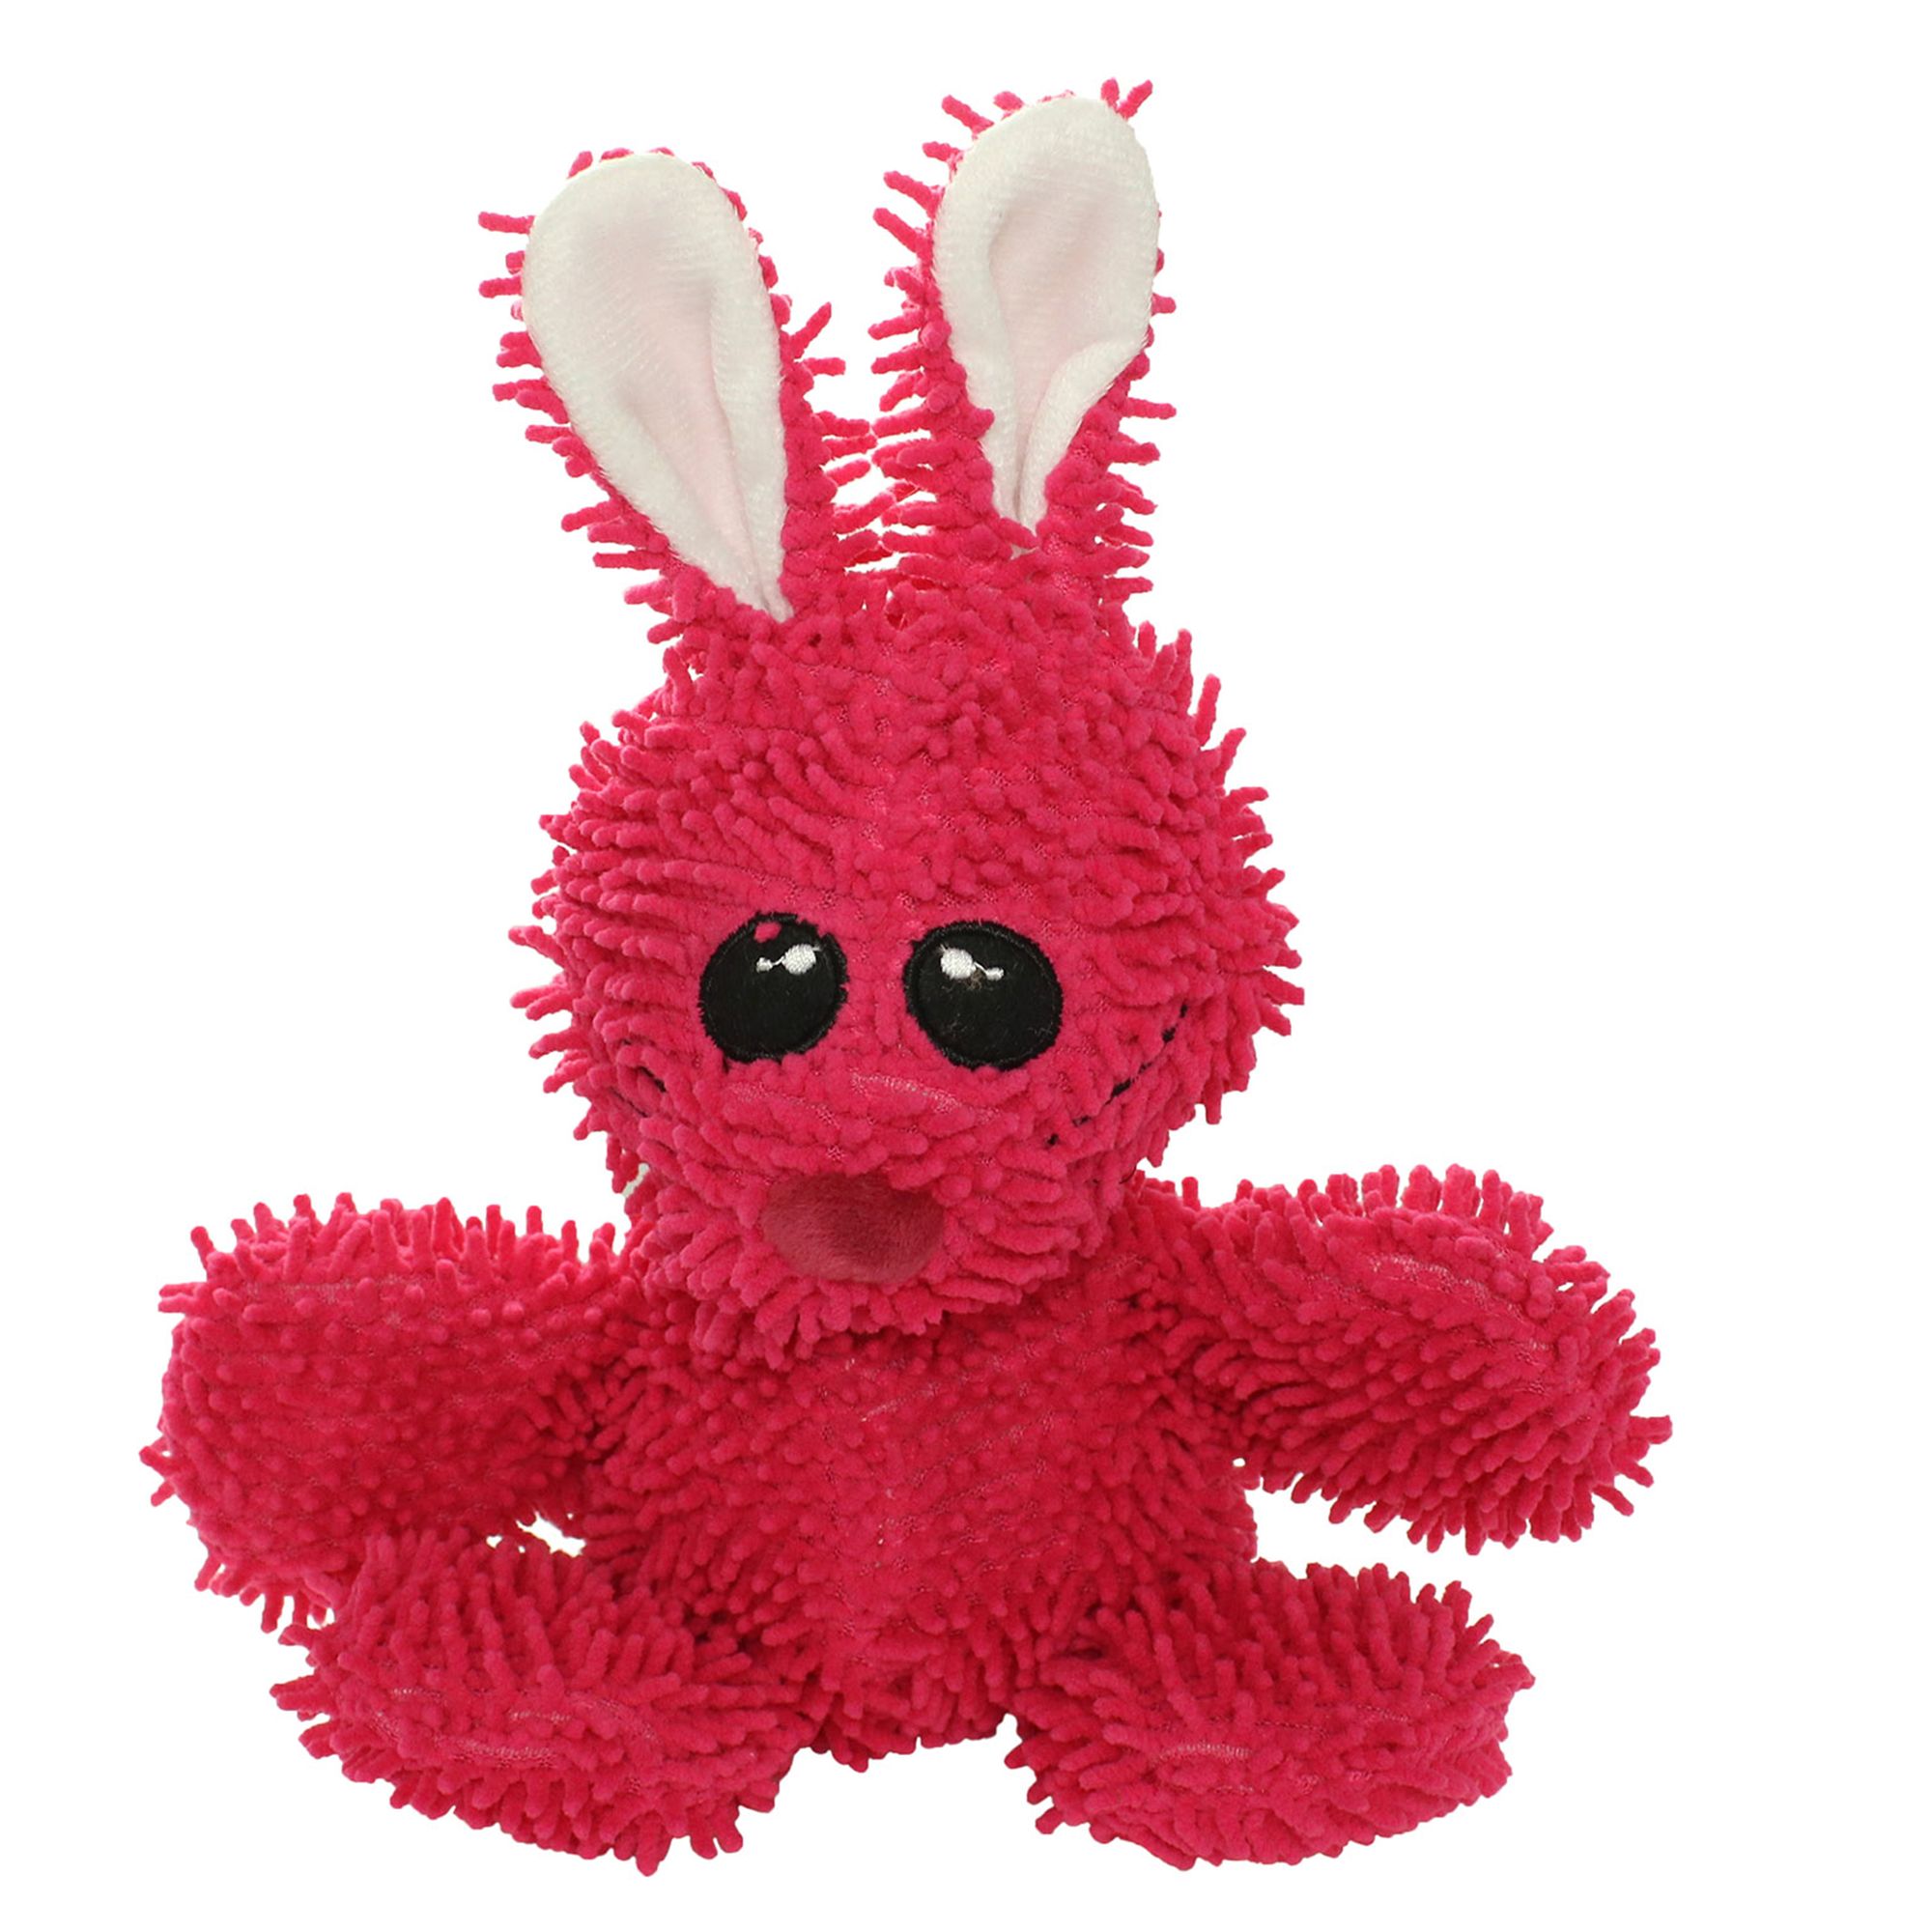 pink rabbit dog toy